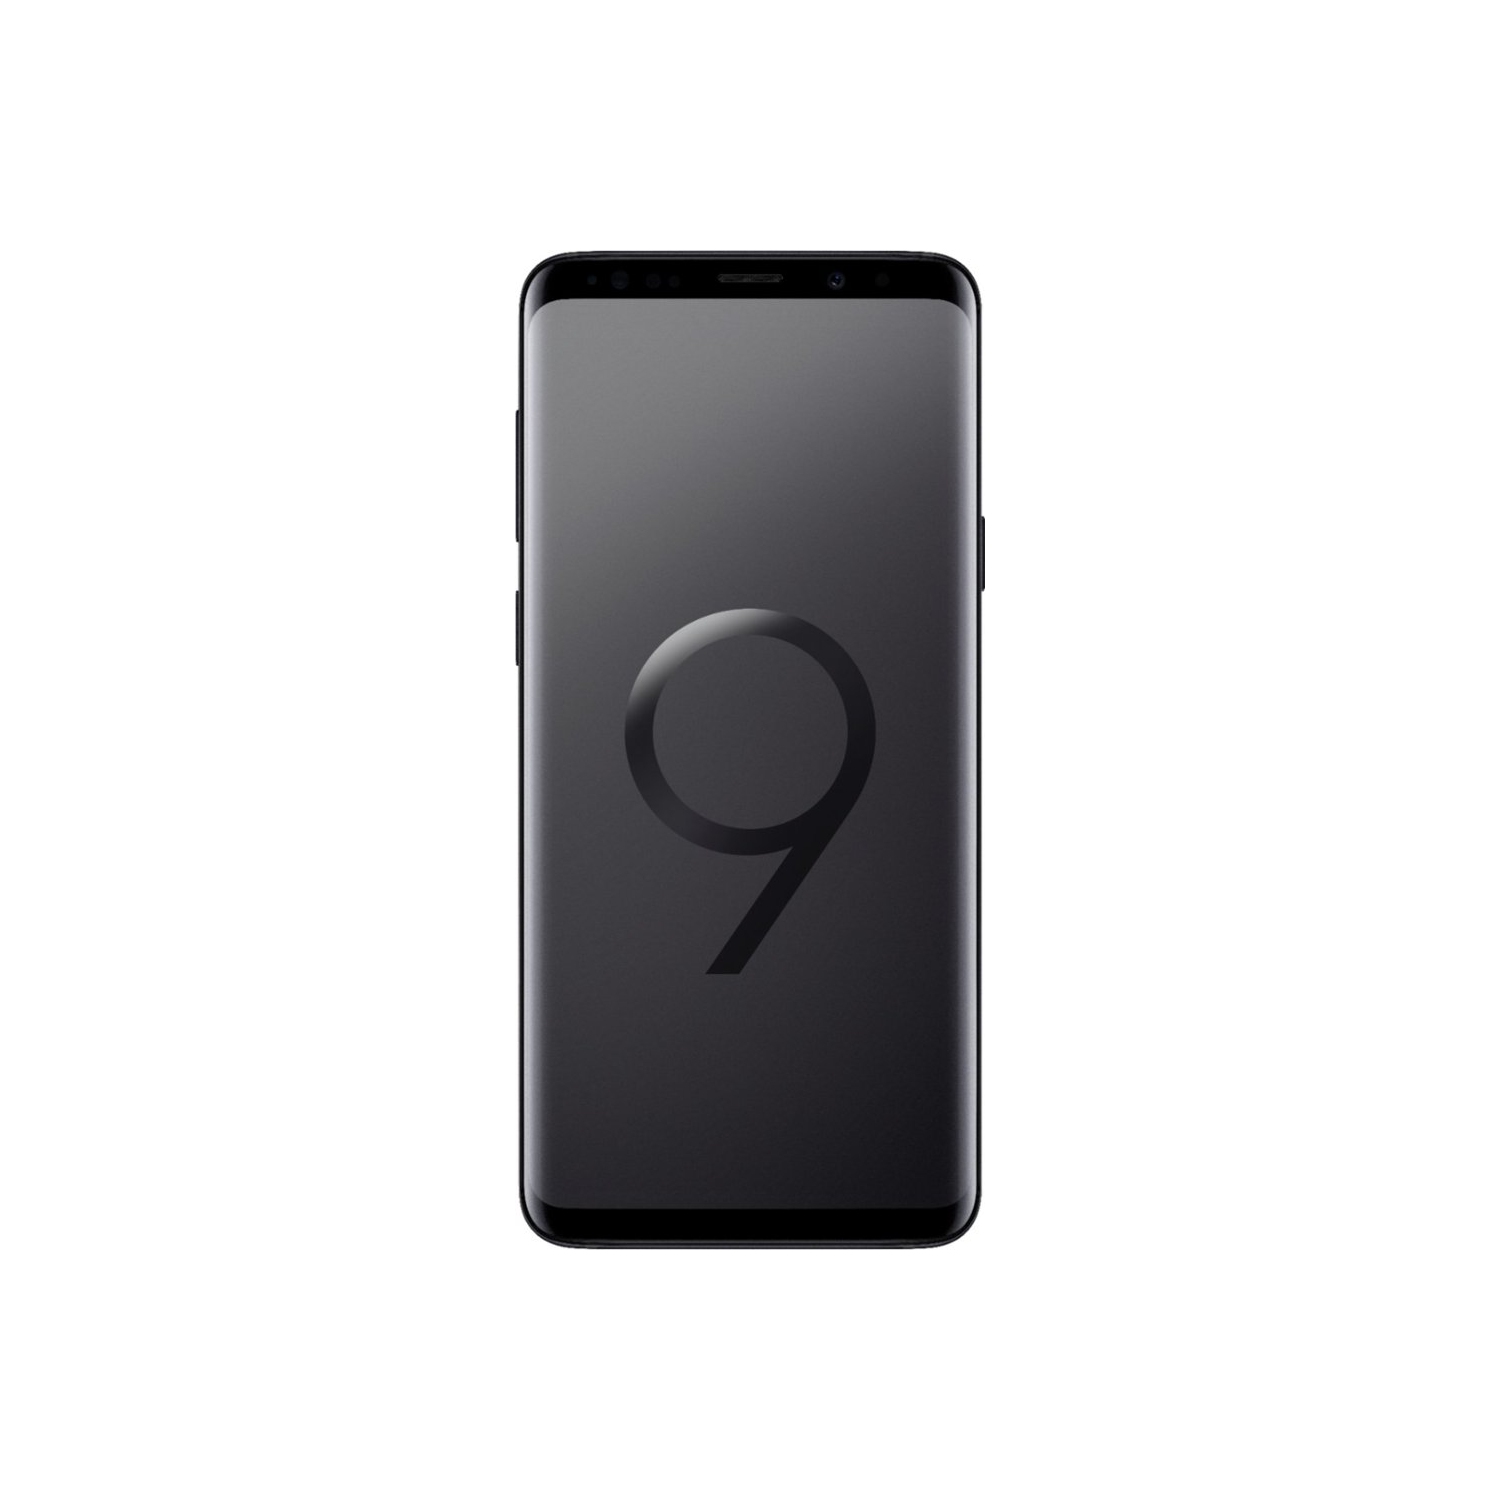 Refurbished (Good) - Samsung Galaxy S9+ 64GB Smartphone - Midnight Black - Unlocked